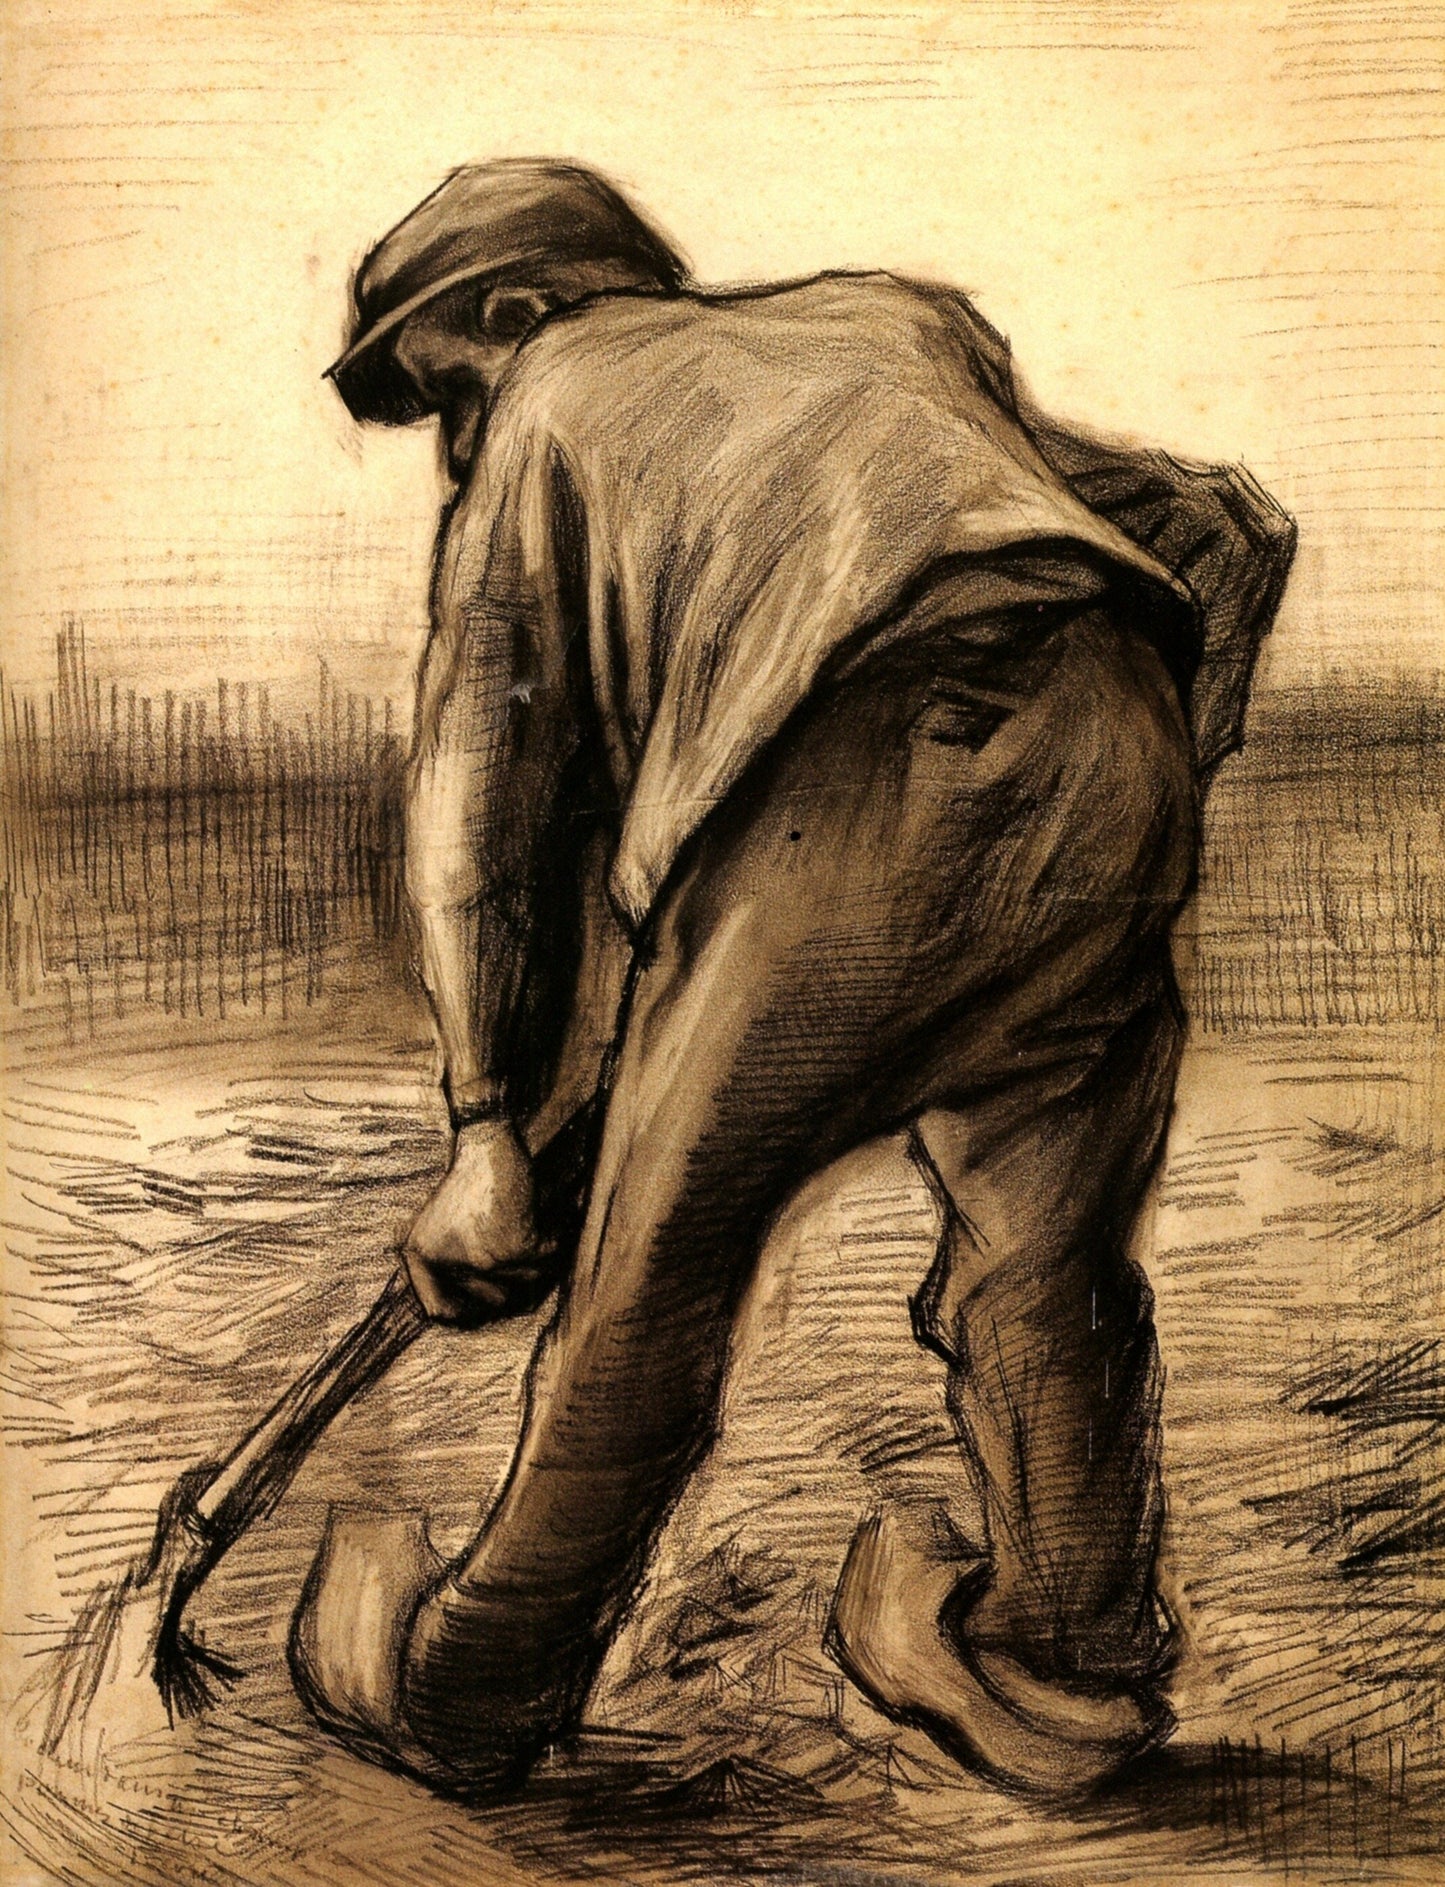 Digger in a Potato Field - February, 1885